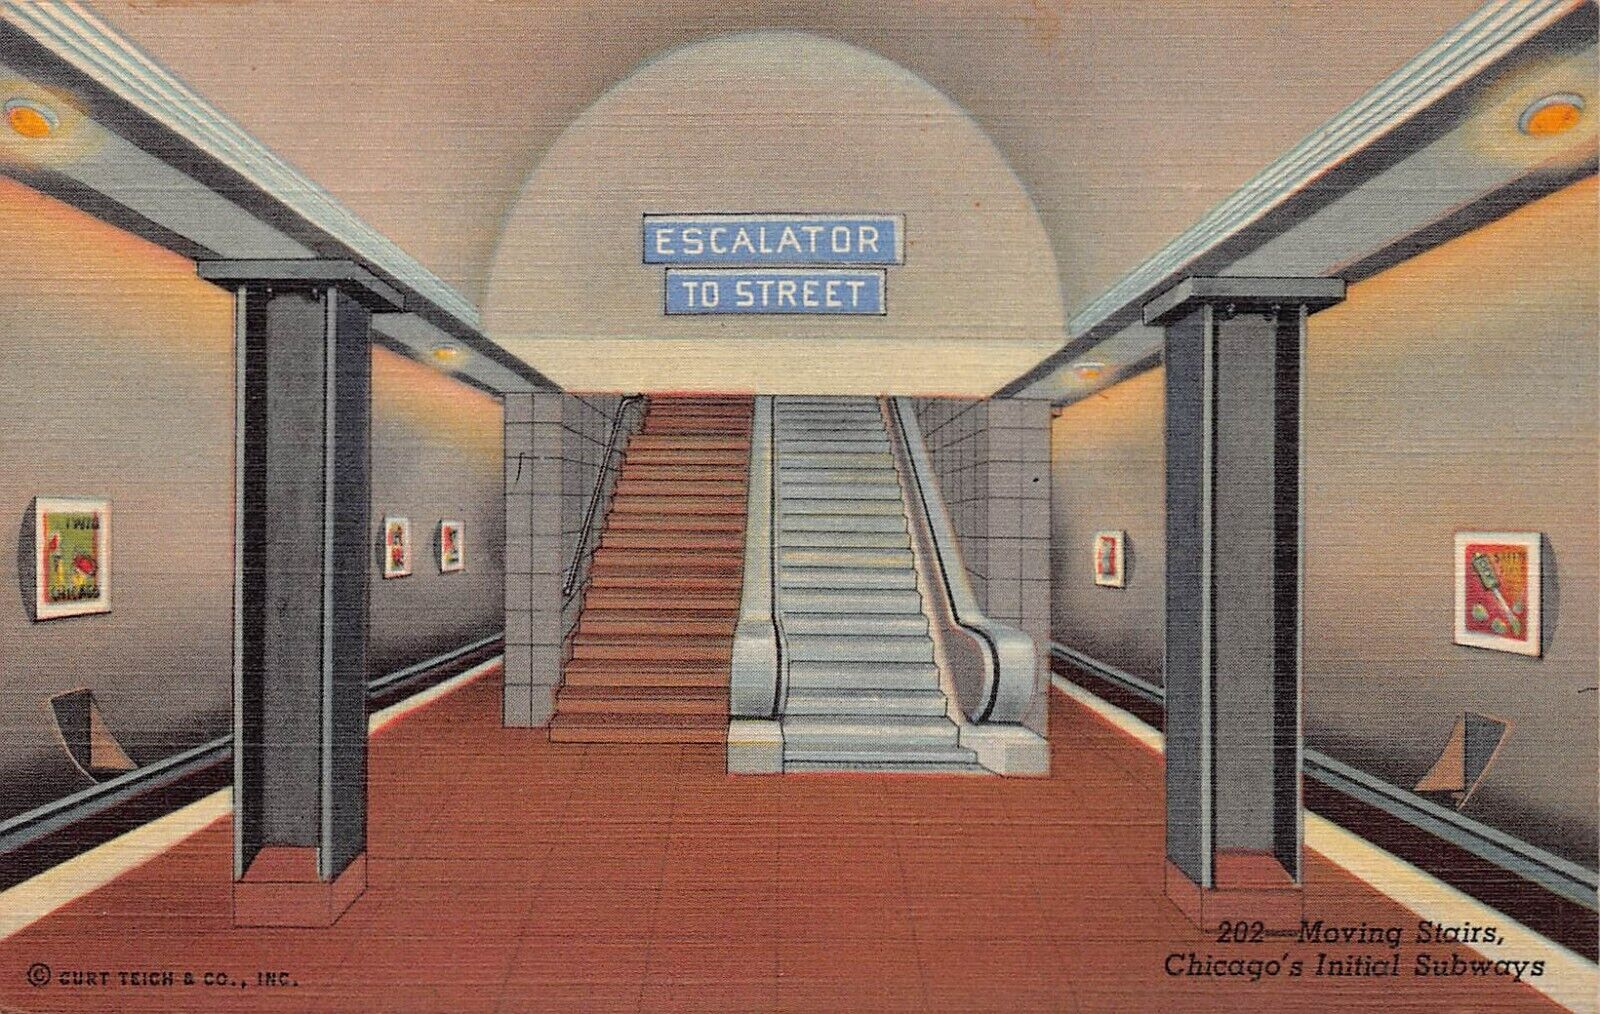 Chicago IL Illinois Train Platform Station Depot Subway Linen Postcard L12